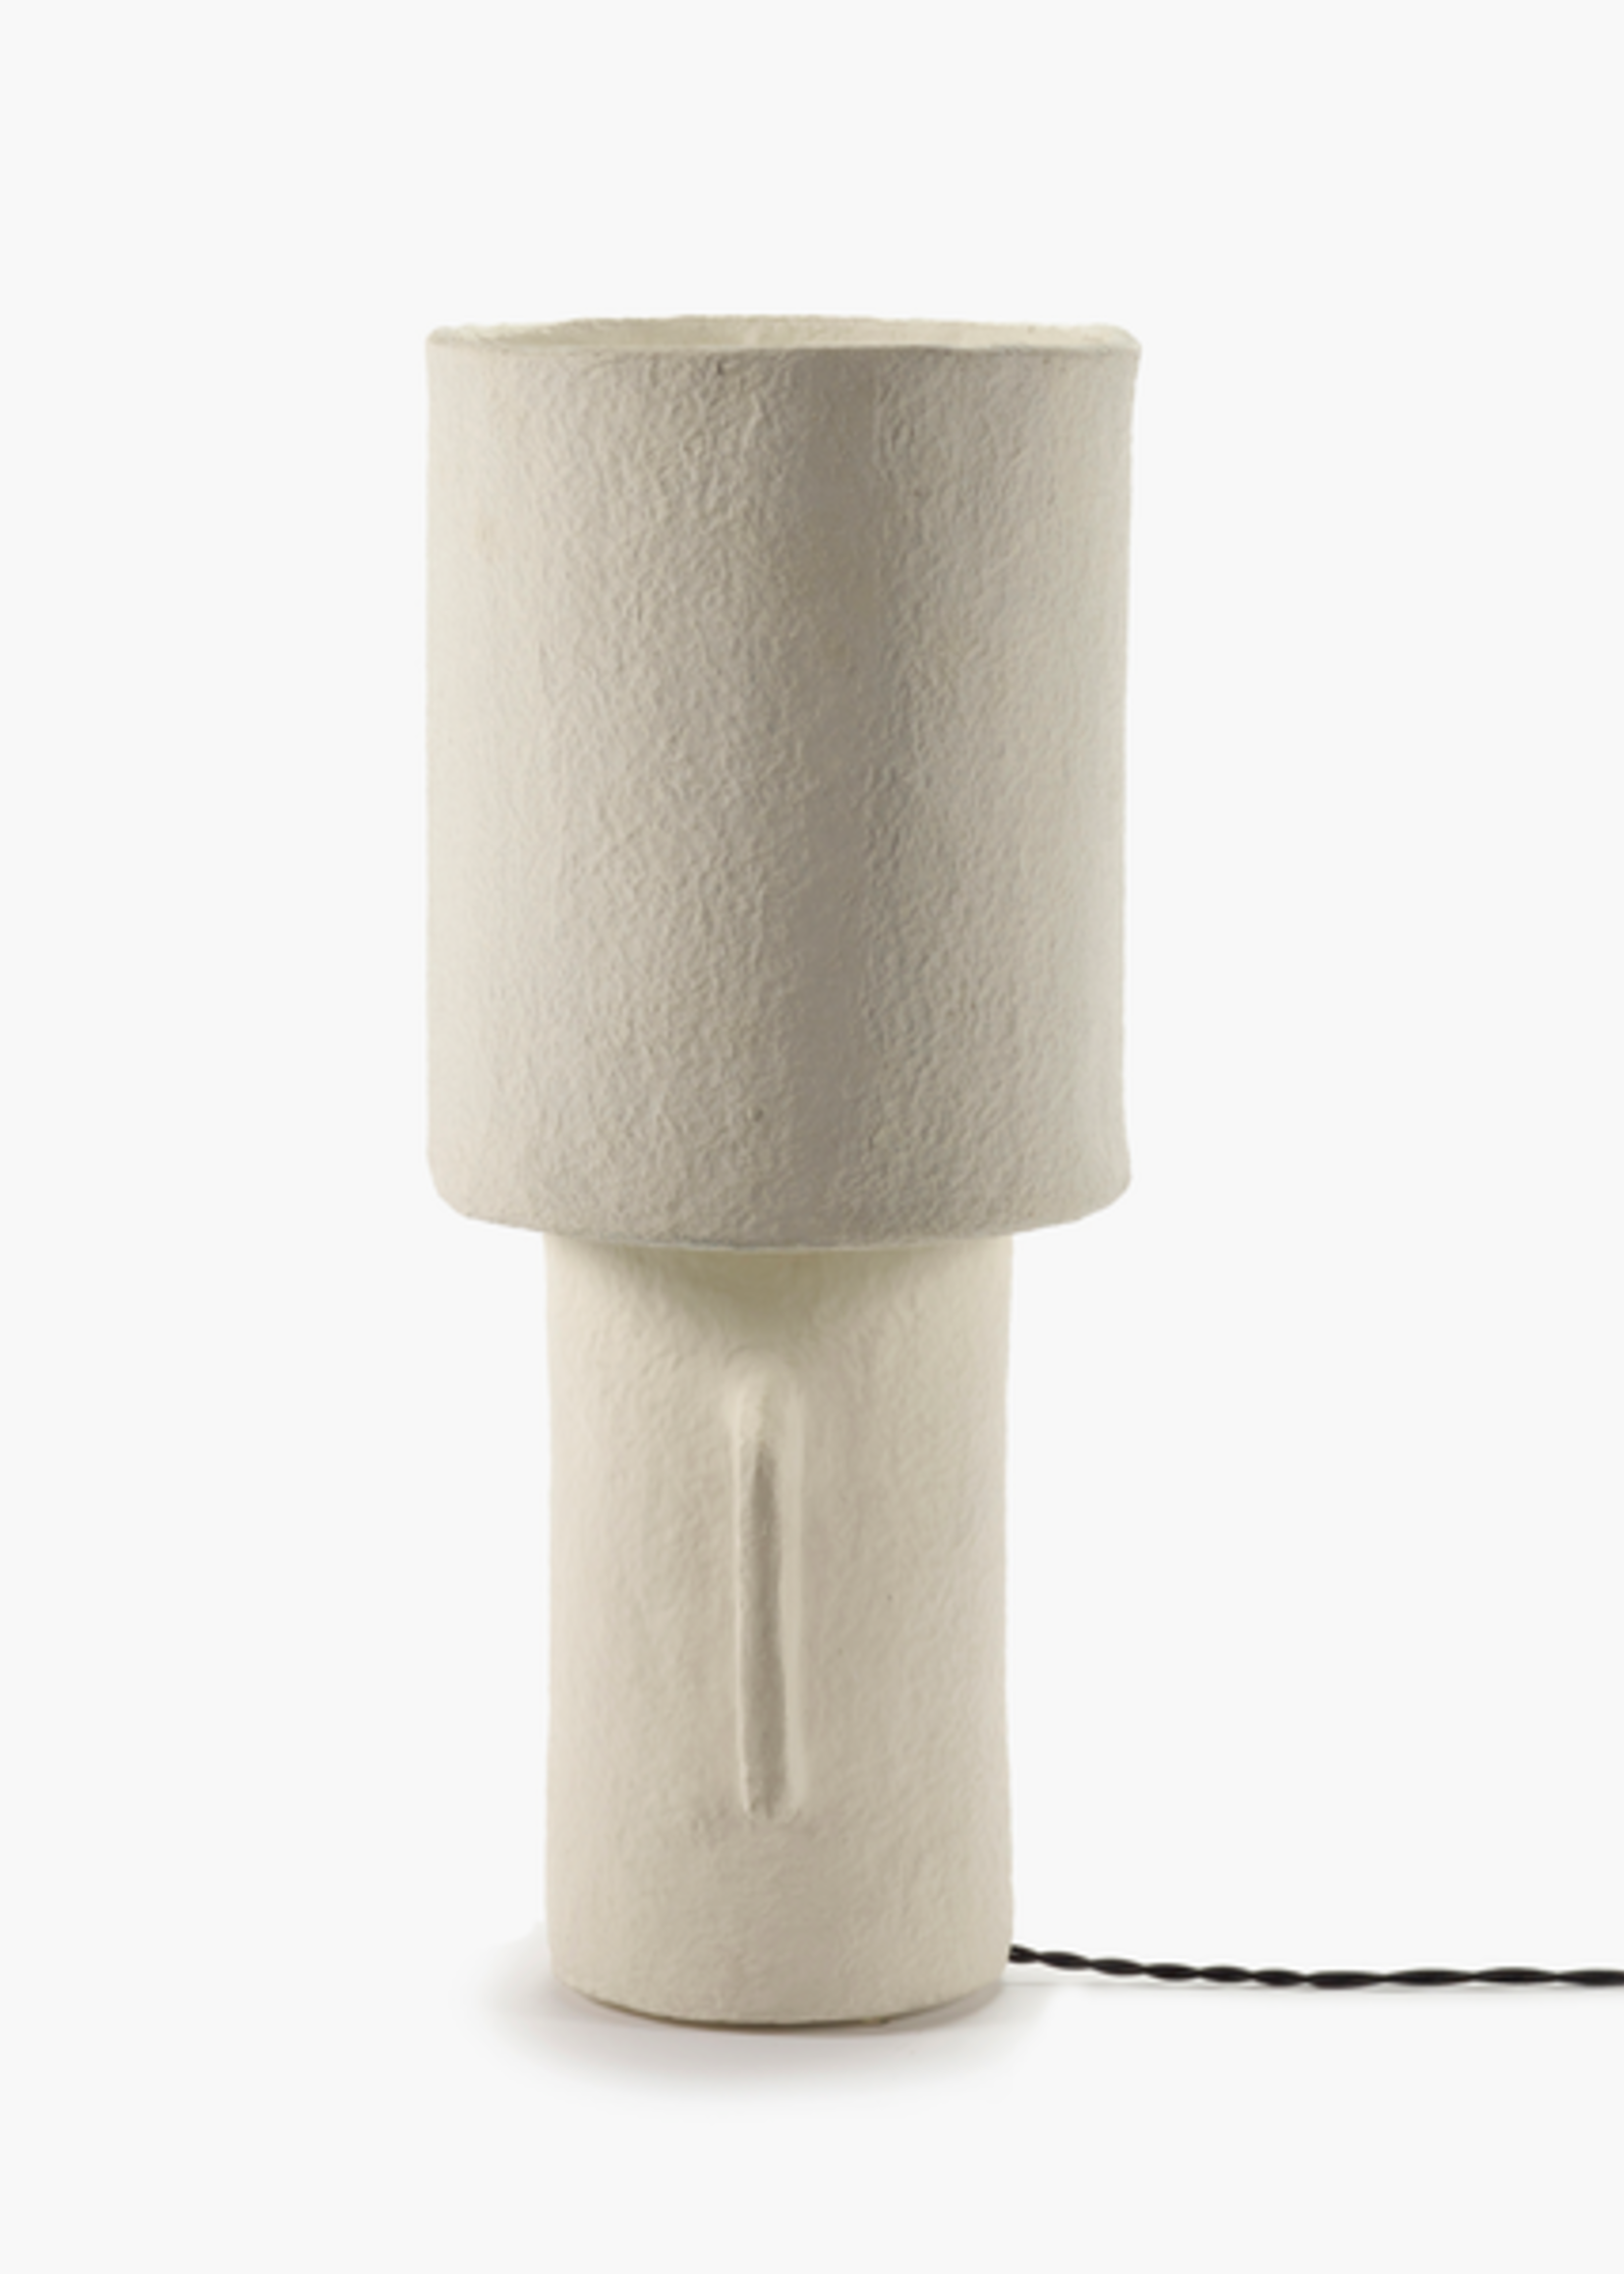 Serax Serax - Marie Michielssen - Earth - Lampe à poser - S - H 47cm - blanc - papier mâché